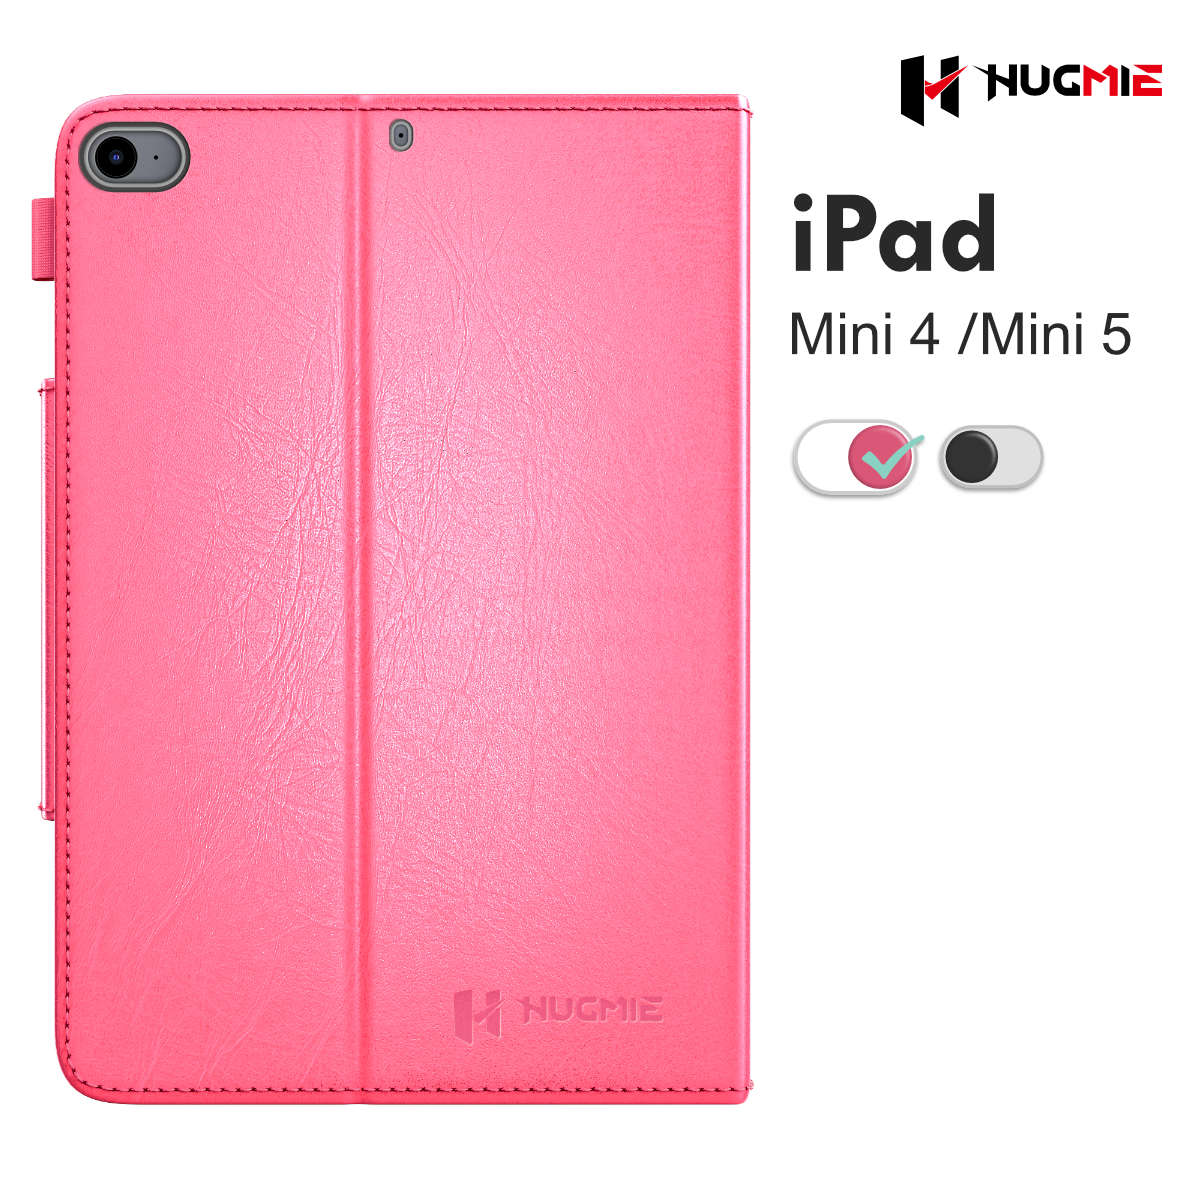 iPad Mini 4/5 Leather Folio Case Sensation Series | Hugmie